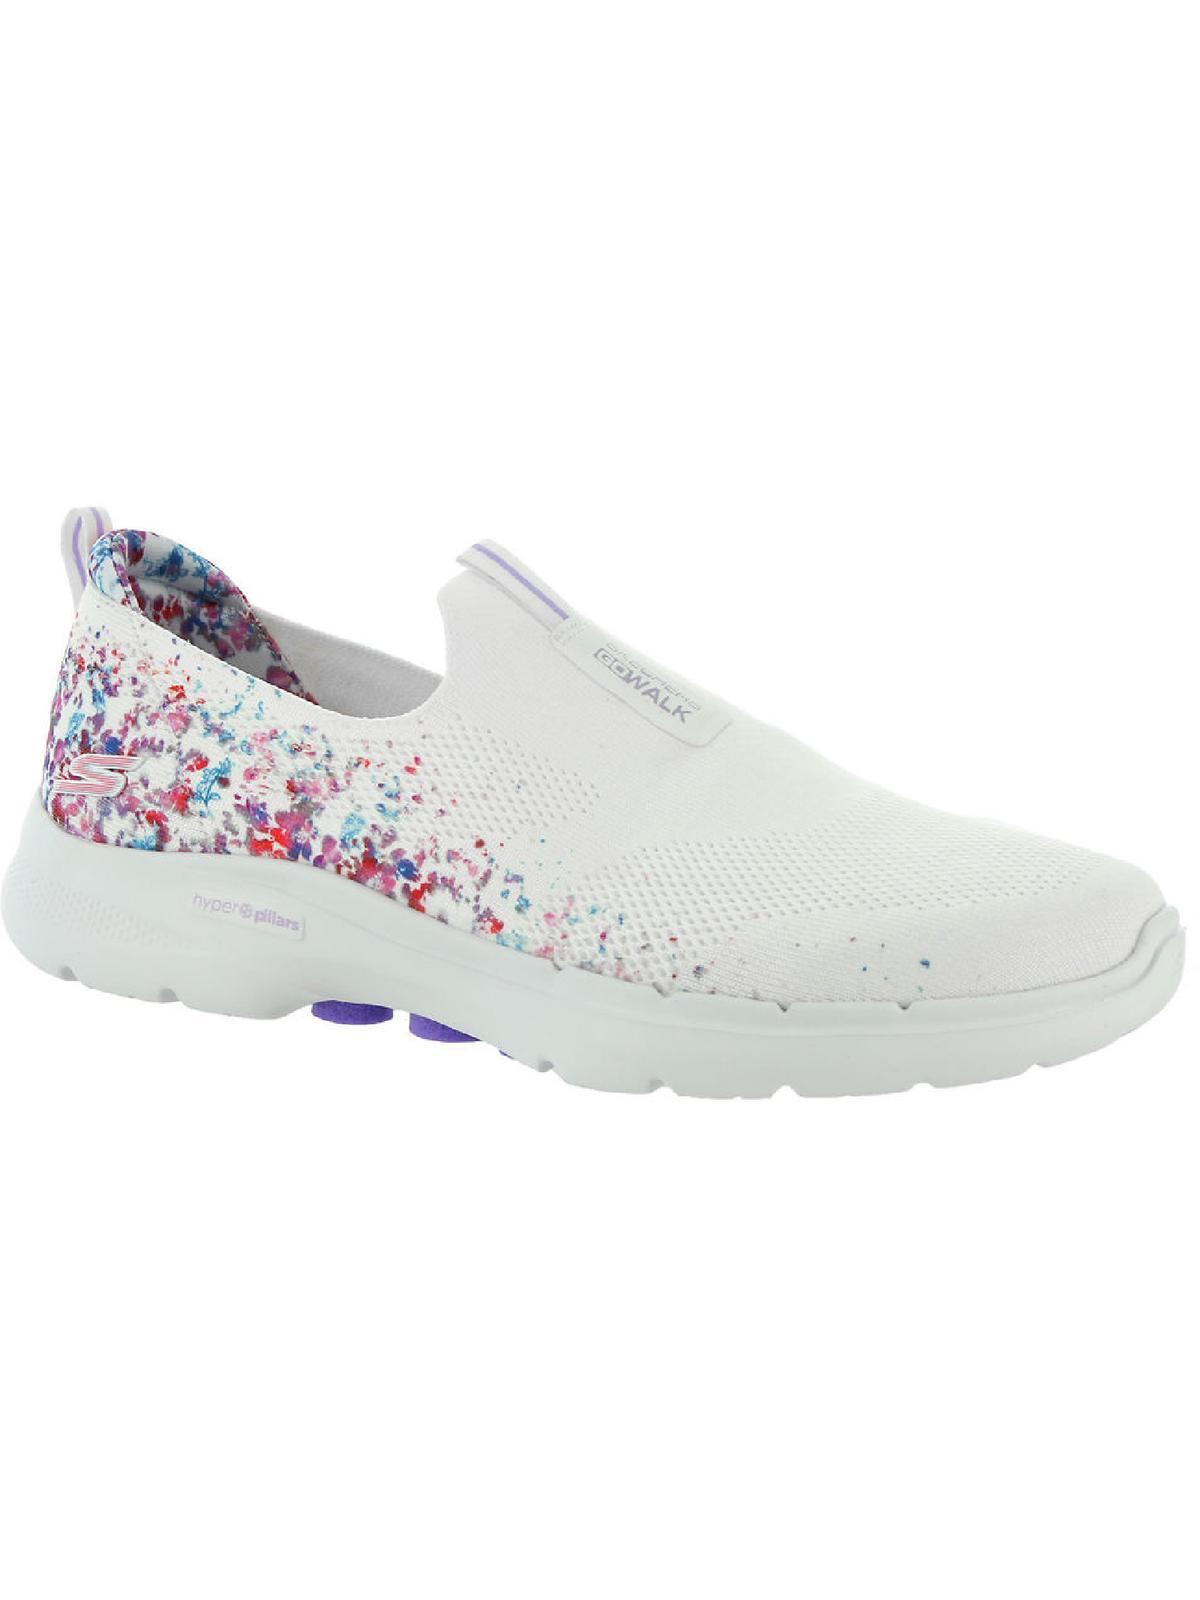 Skechers Go Walk 6 - Floral Sunrise Active Memory Foam Slip-on Sneakers in  White | Lyst